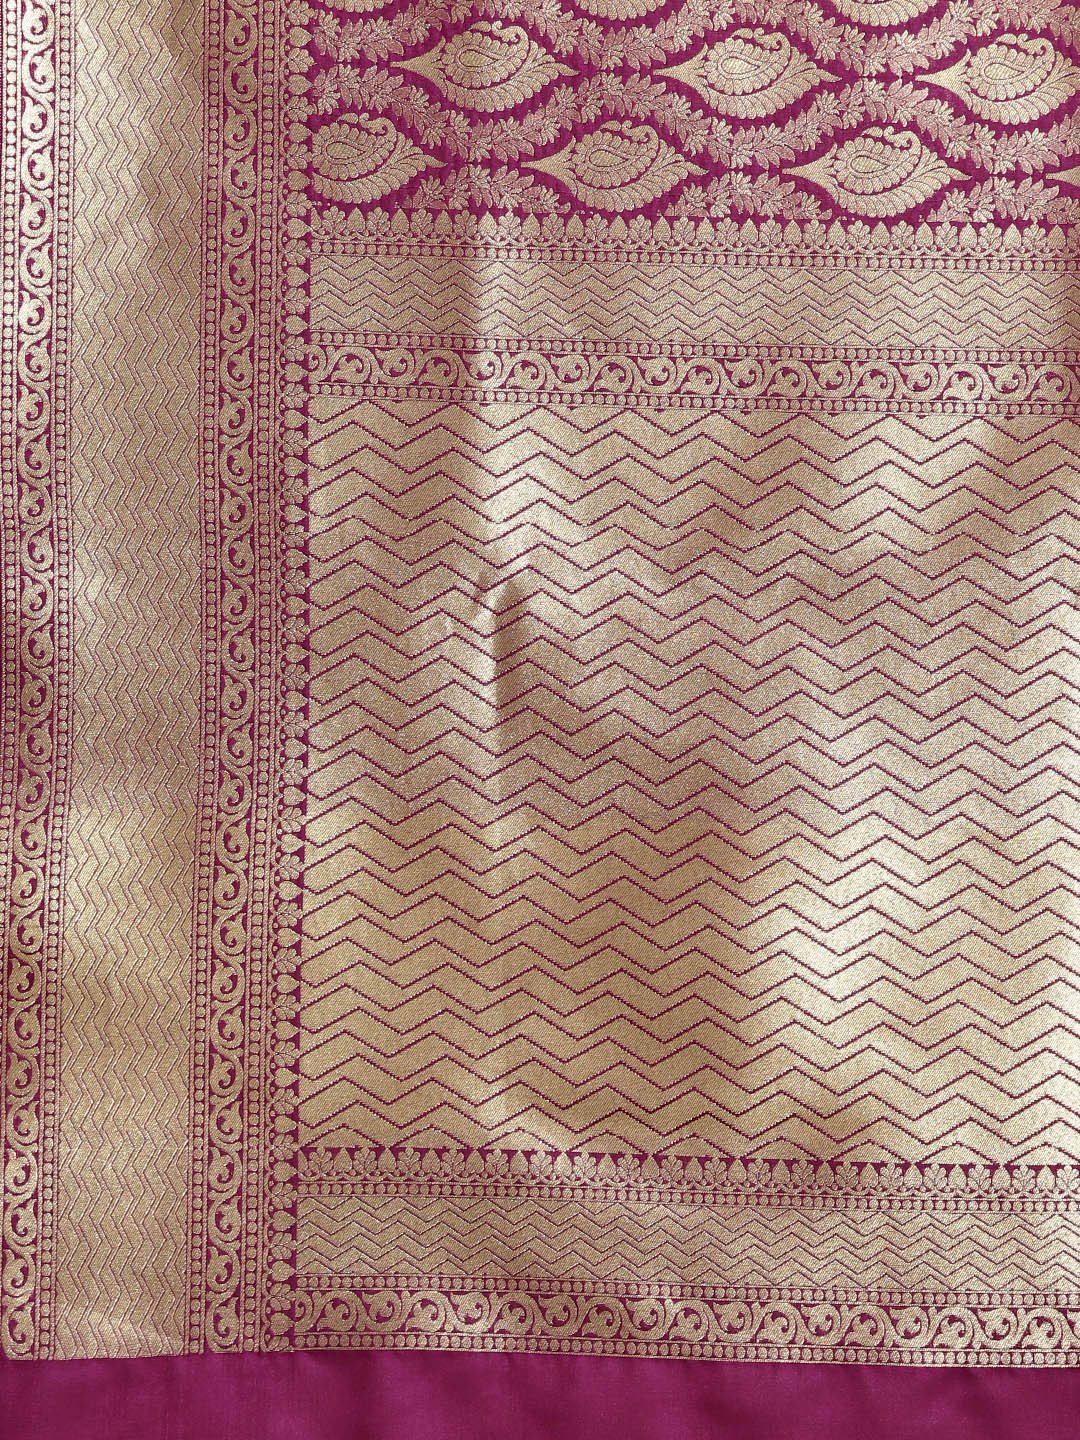 Kanjiwaram Silk Saree with Stylish Paisley Zari Weaving